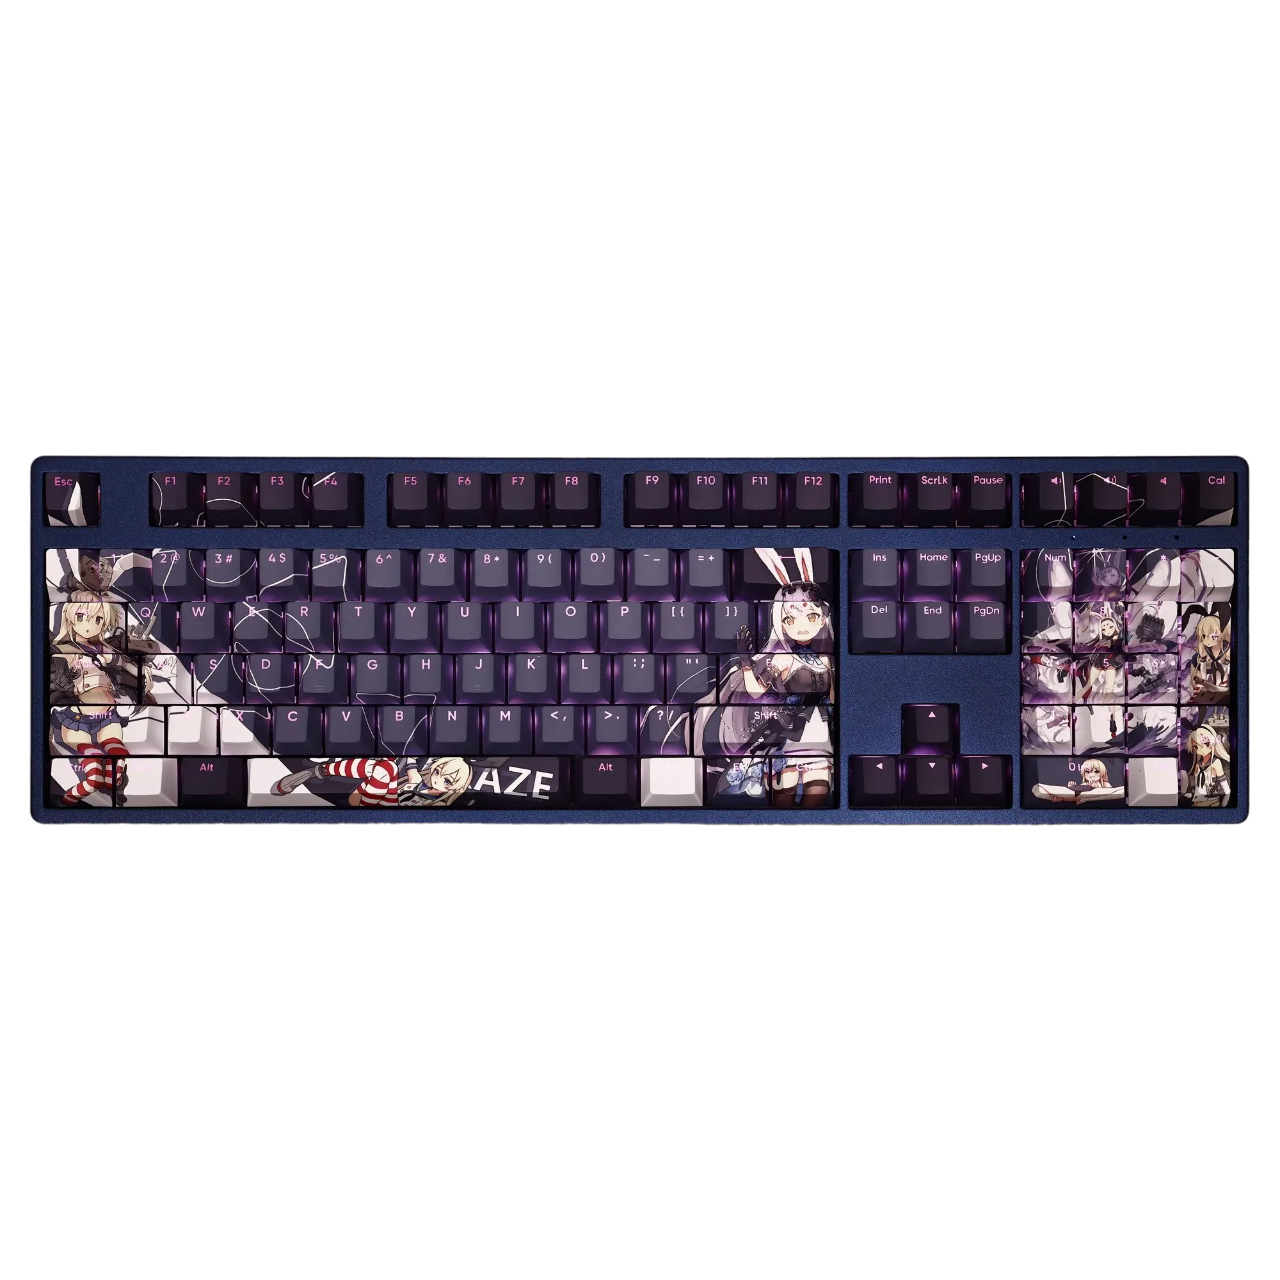 KanColle: Shimakaze Backlit Keycap Set